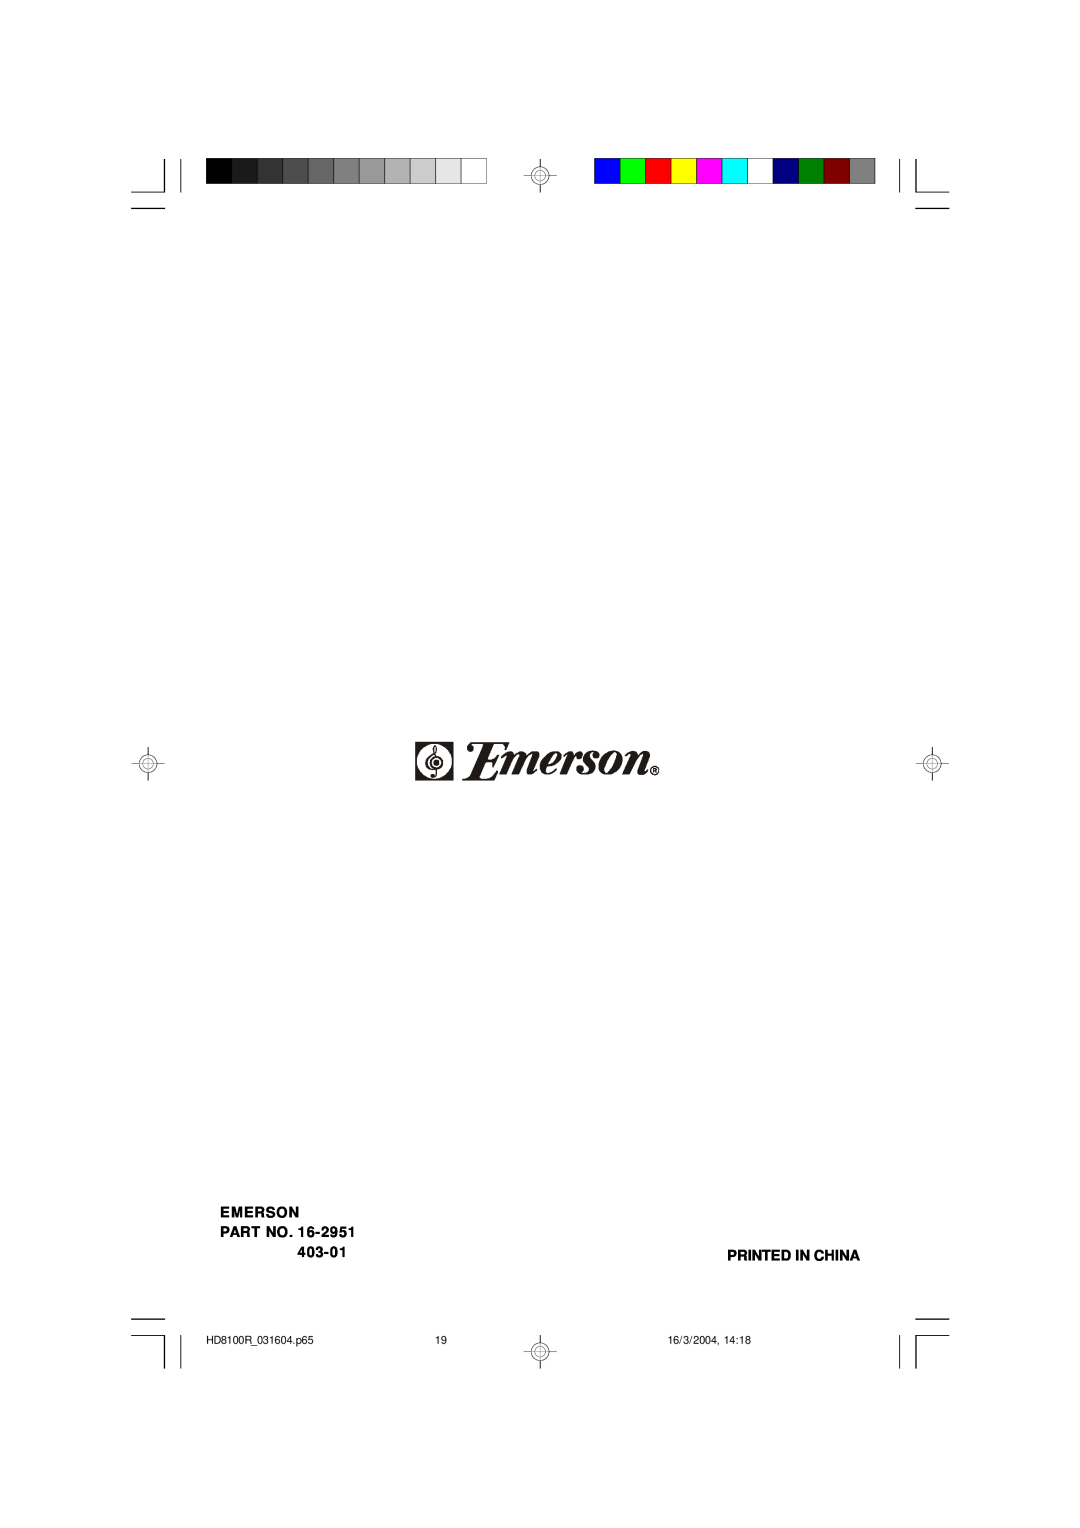 Emerson owner manual Emerson, 403-01, HD8100R 031604.p65, 16/3/2004 